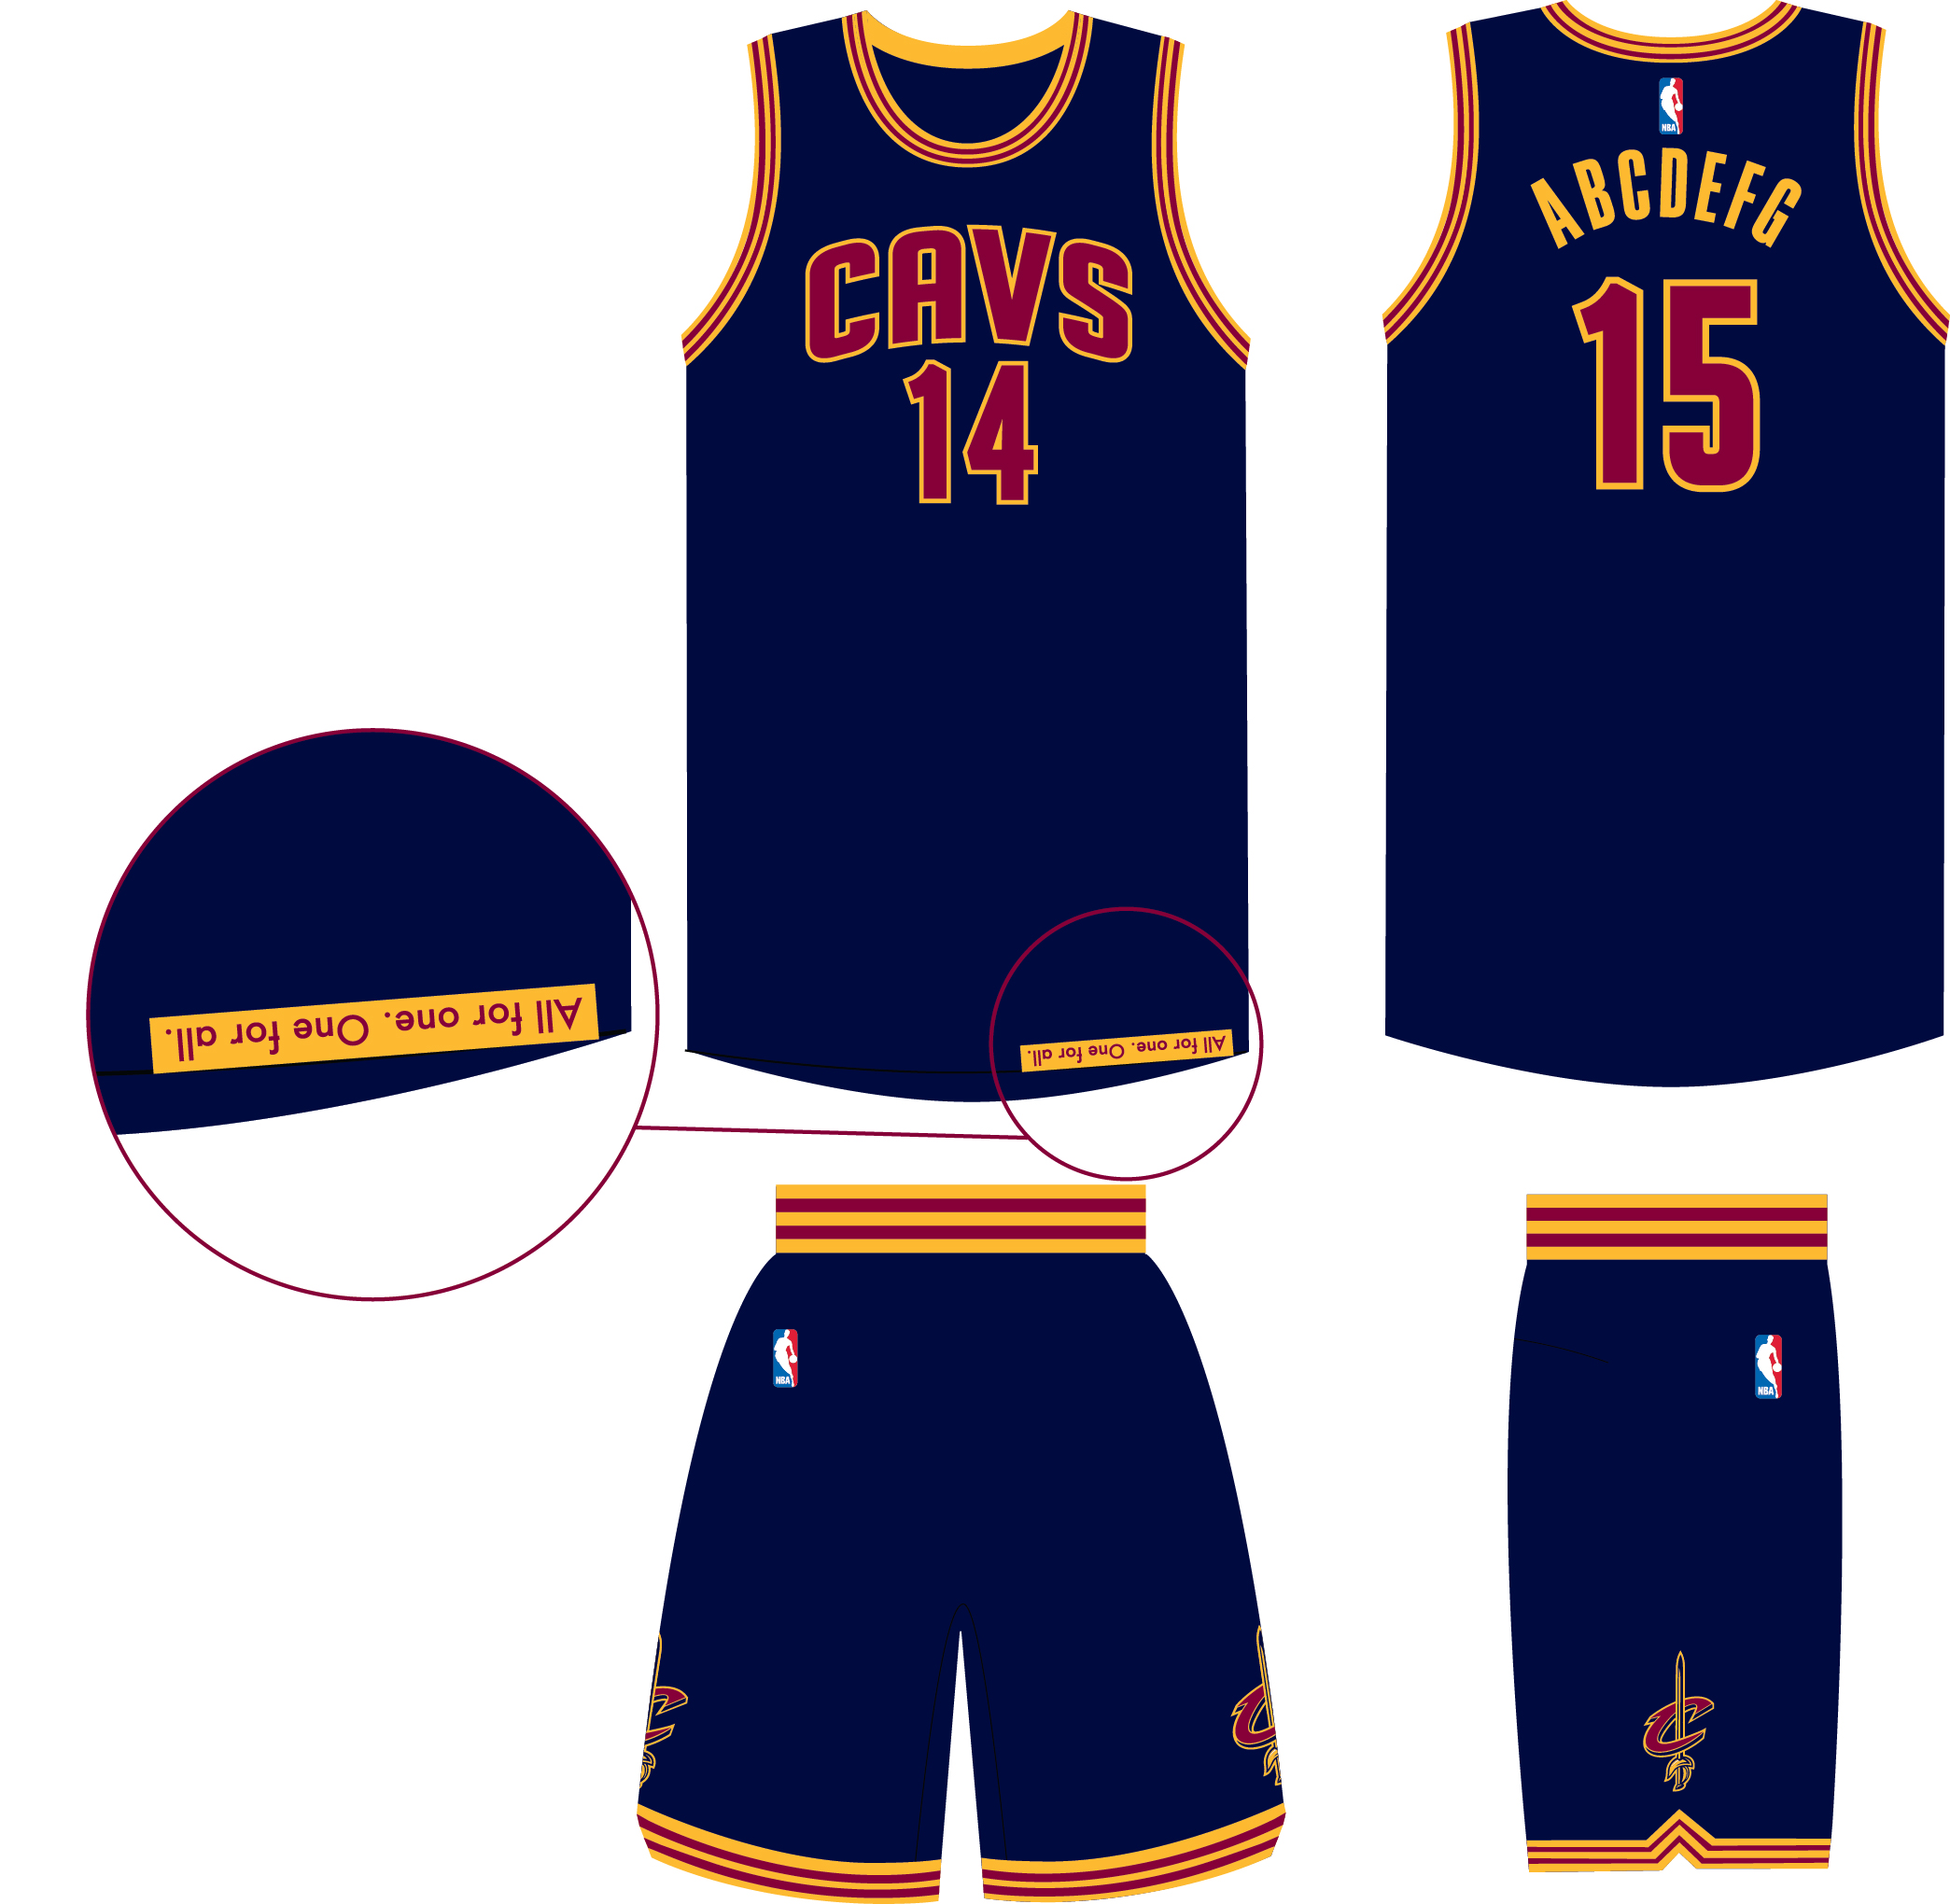 alternate uniforms for the Cavs 